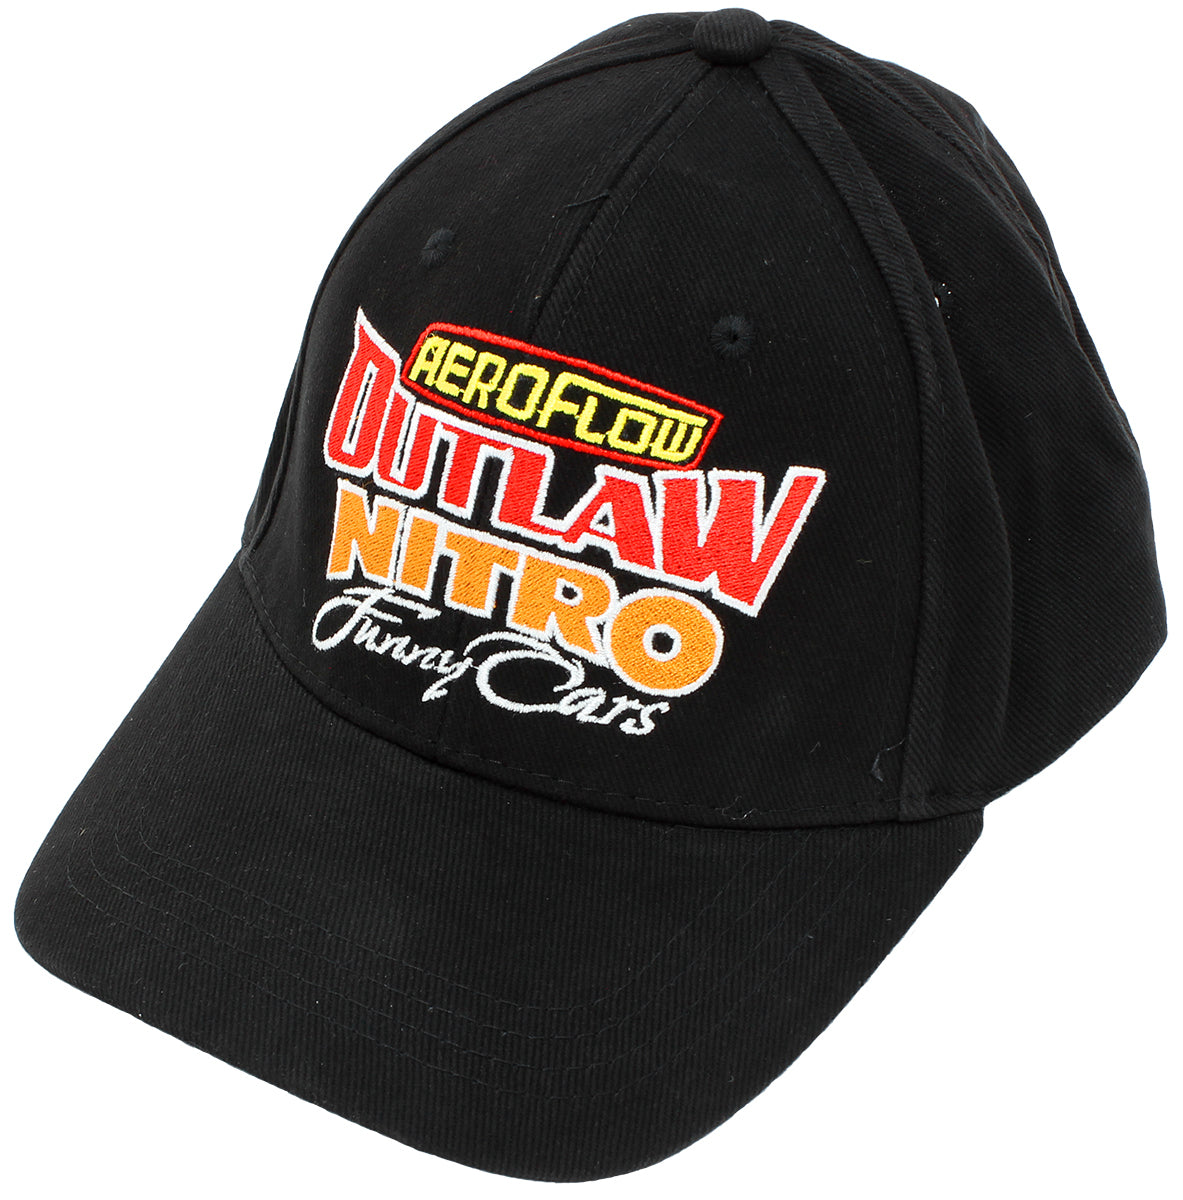 Aeroflow Outlaw Funny Car Black Cap (Adjustable Fit (Version 2))